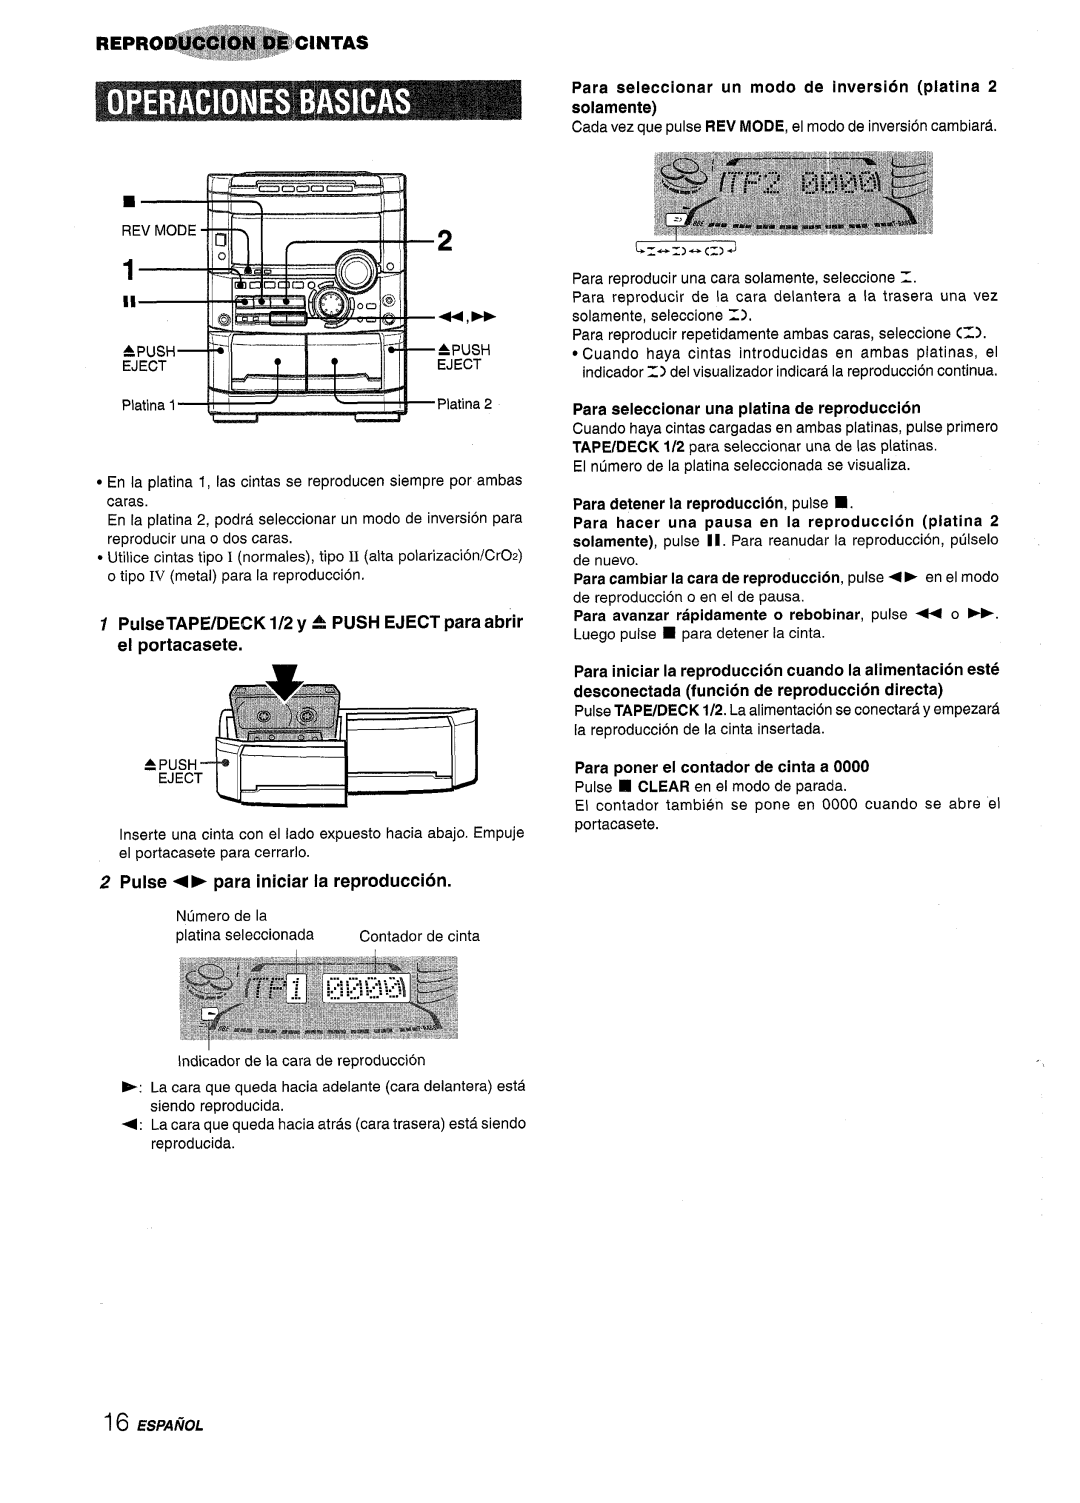 Sony NSX-A767 manual 44,W, PulseTAPE/DECK 1/2 y A PUSH EJECT para abrir el portacasete, Pulse para iniciar la reproduction 